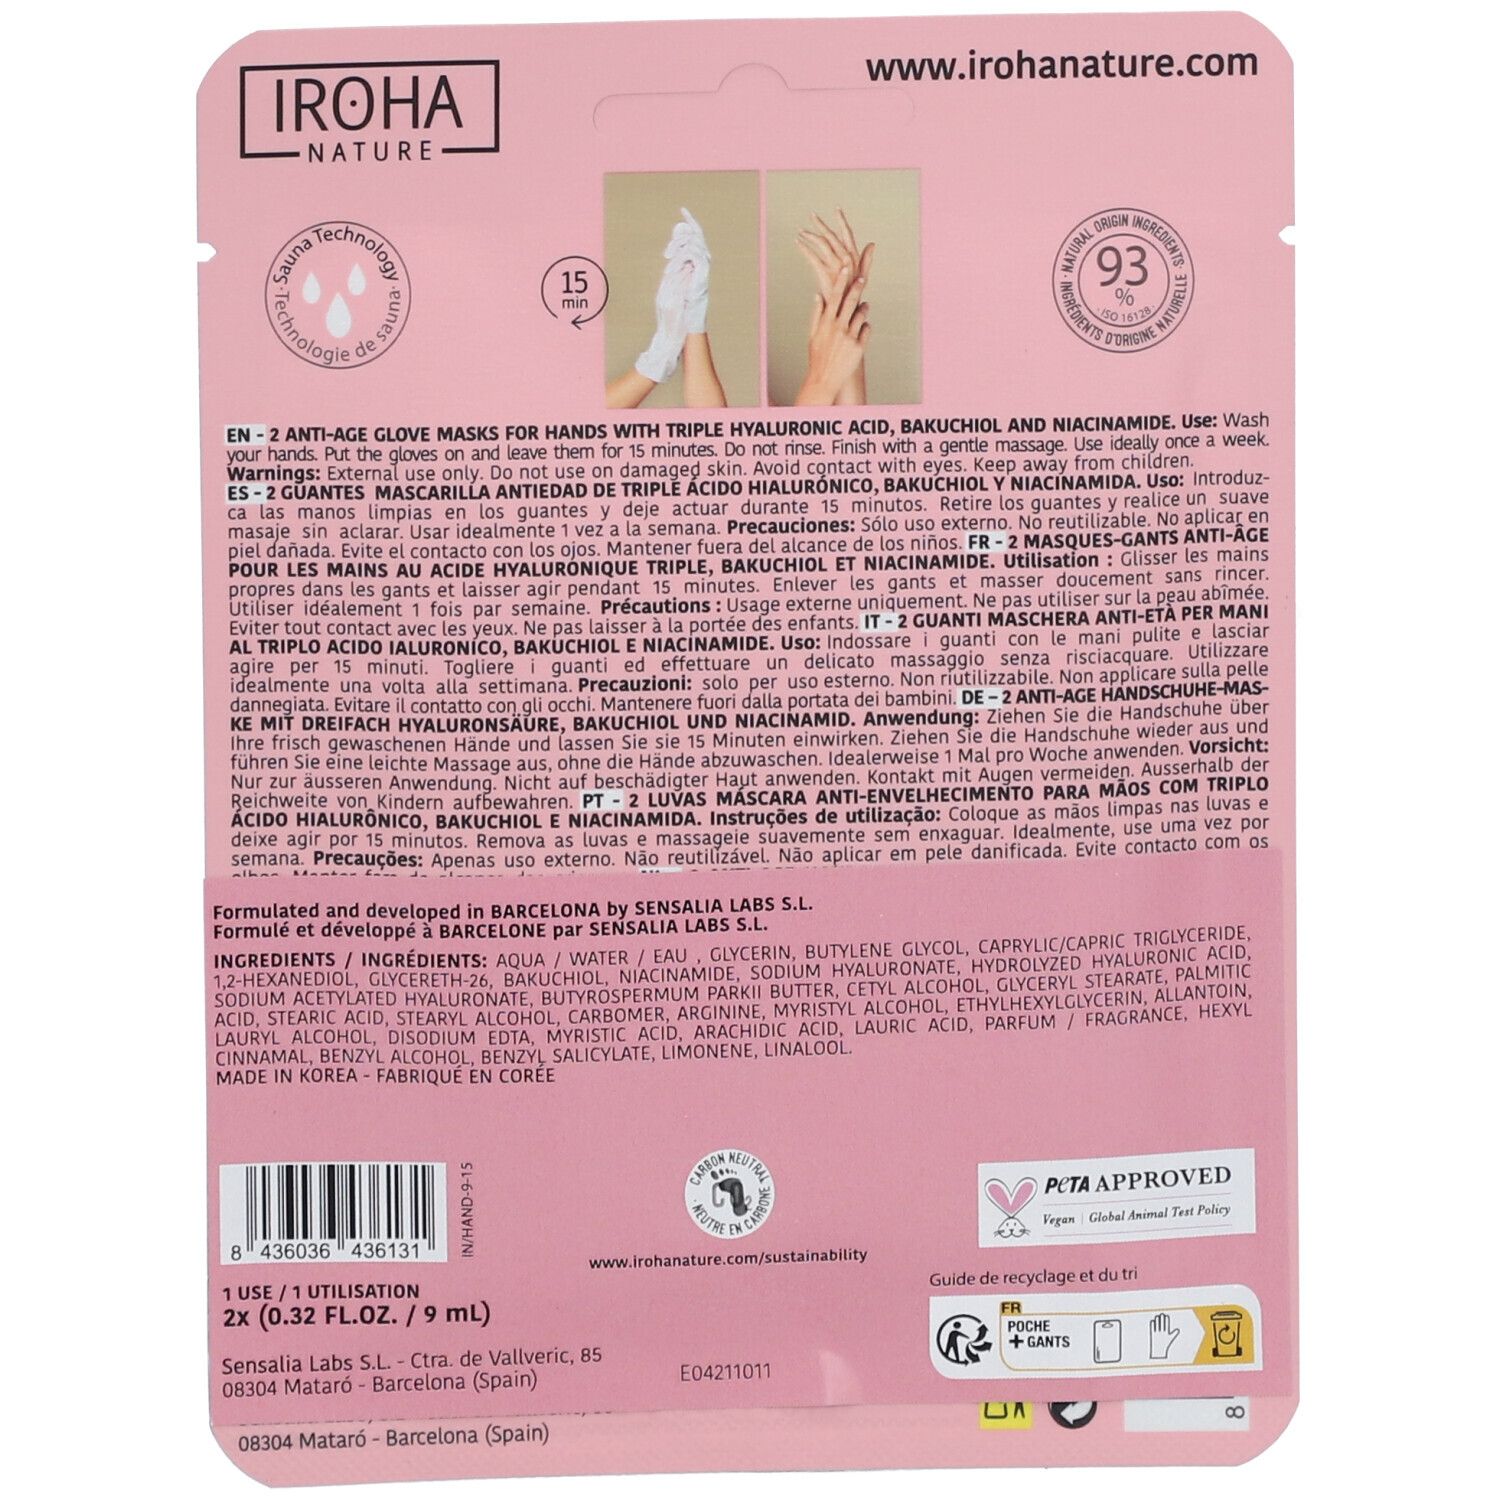 IROHA NATURE Anti-Aging-Handschuhmaske - Dreifache Hyaluronsäure, Bakuchiol und Niacinamid